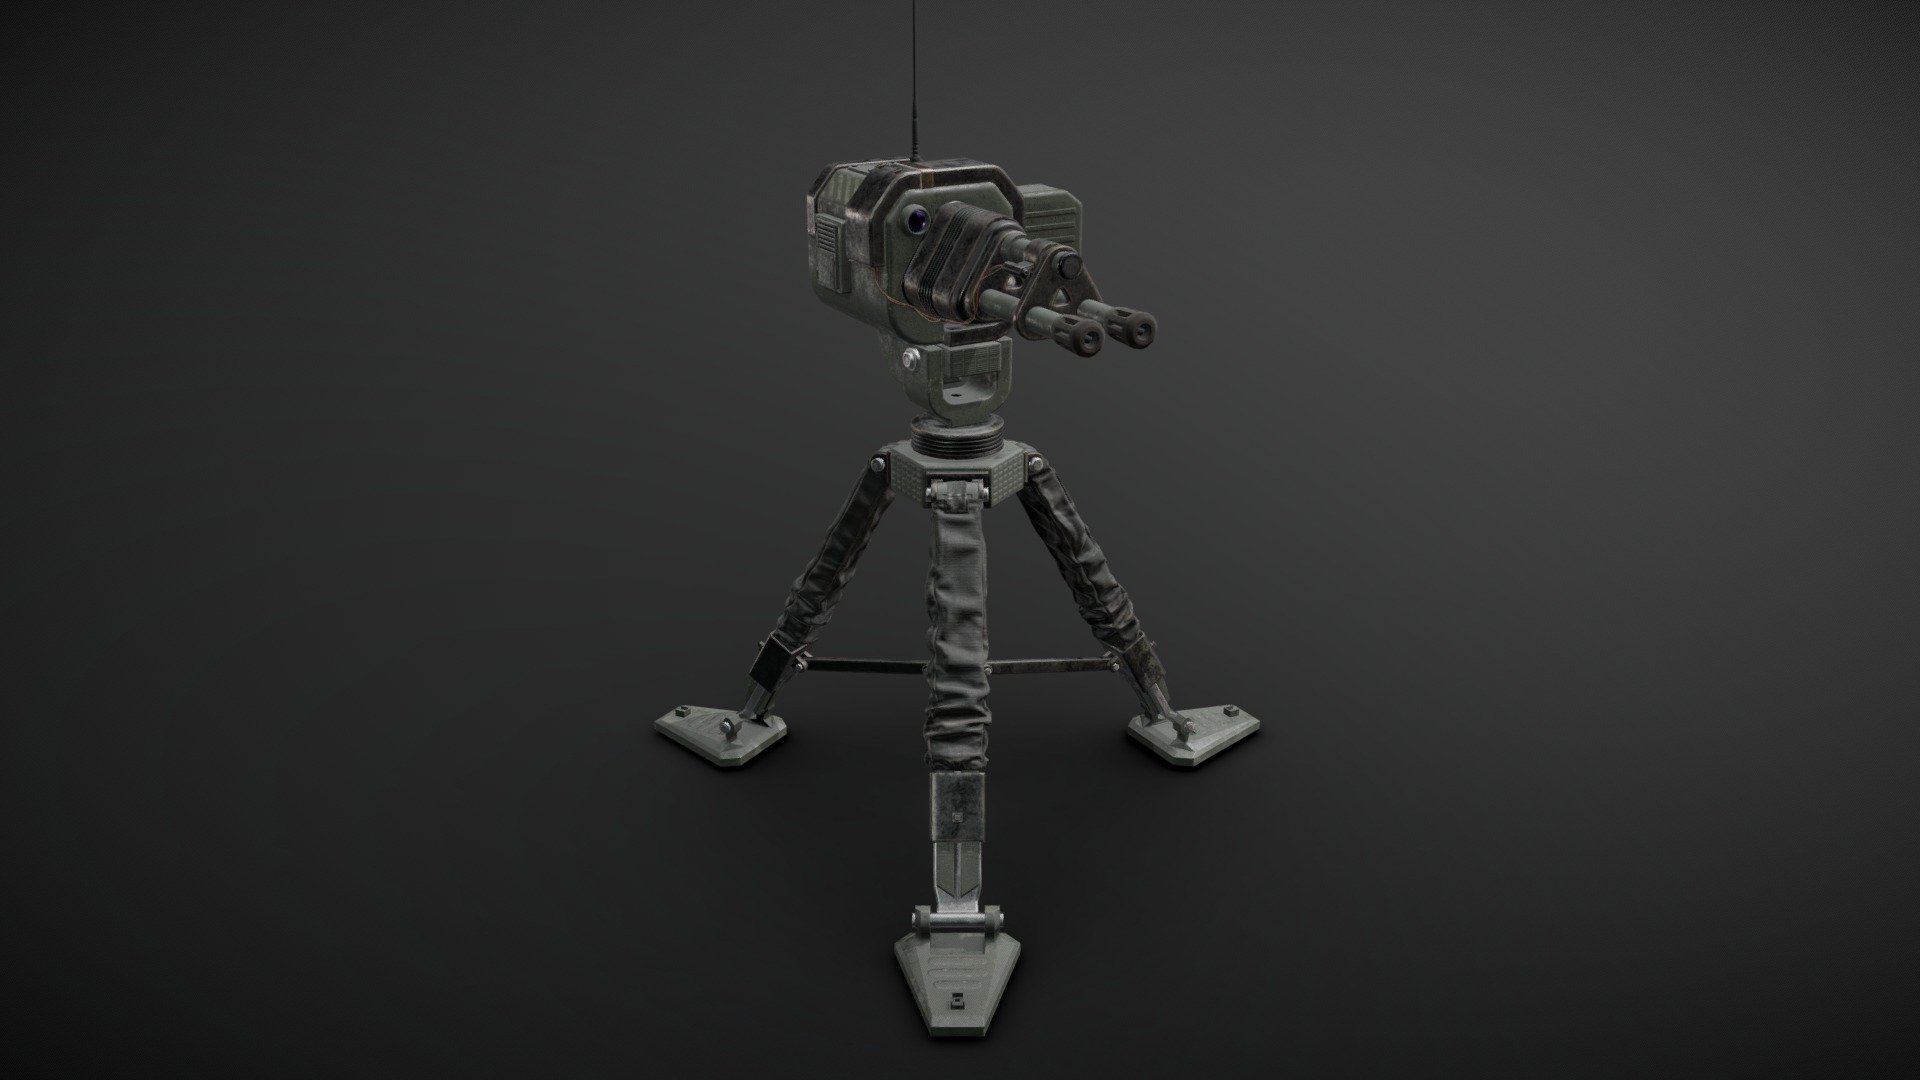 Turret for my personal project
https://www.artstation.com/biviz - Turret - 3D model by Biviz 3d model